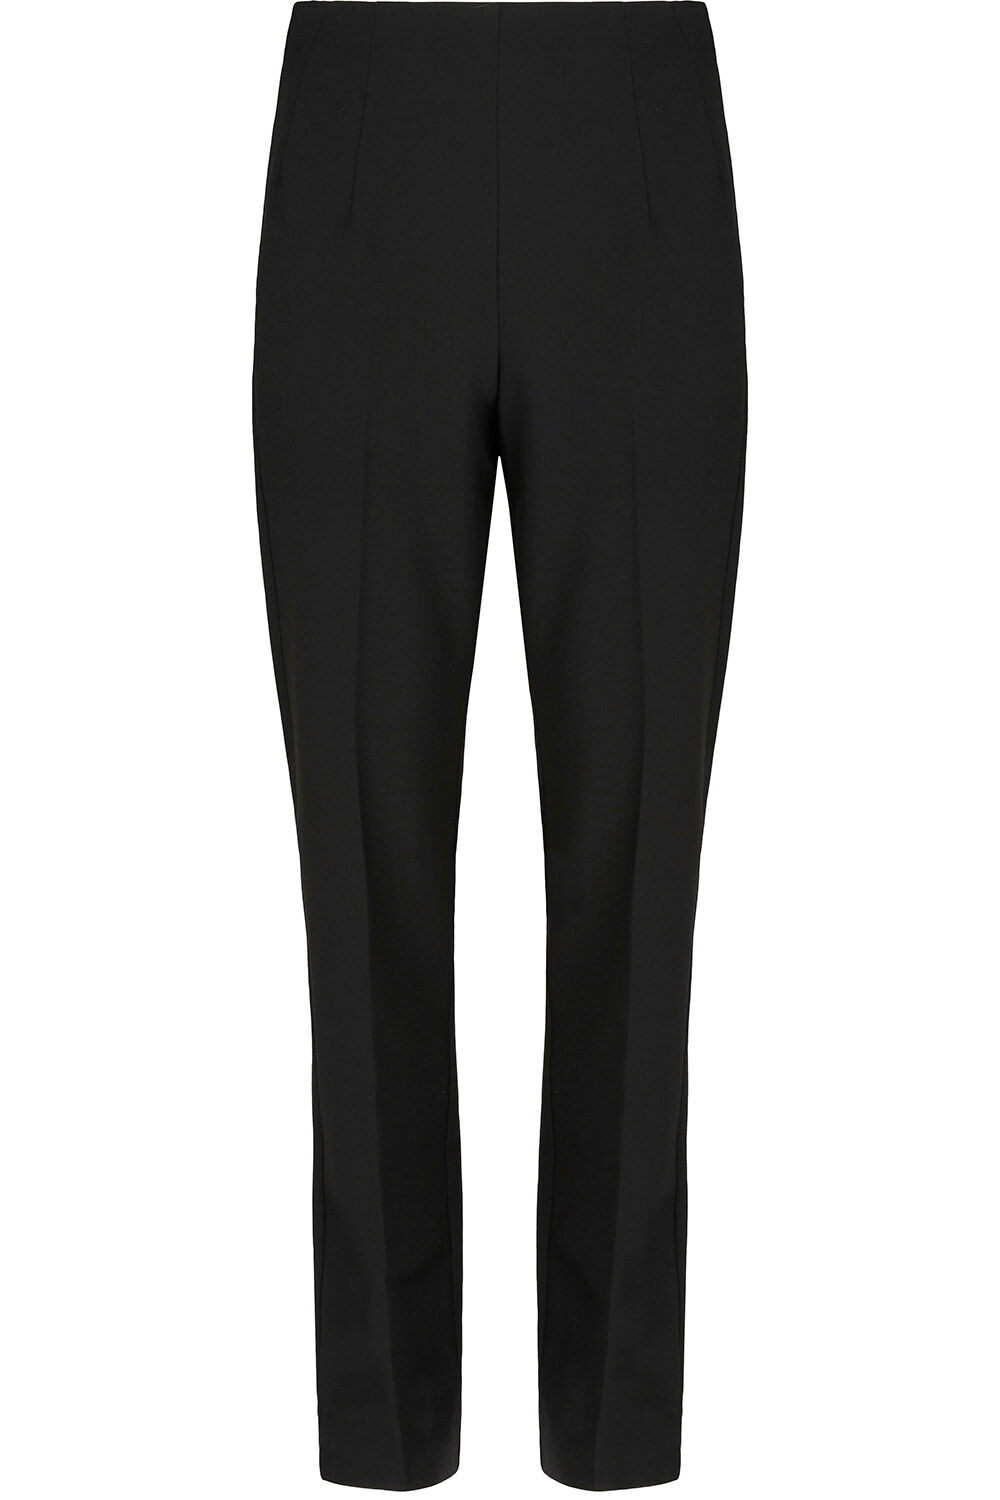 Black Men's black trousers with zip pockets | Bikkembergs